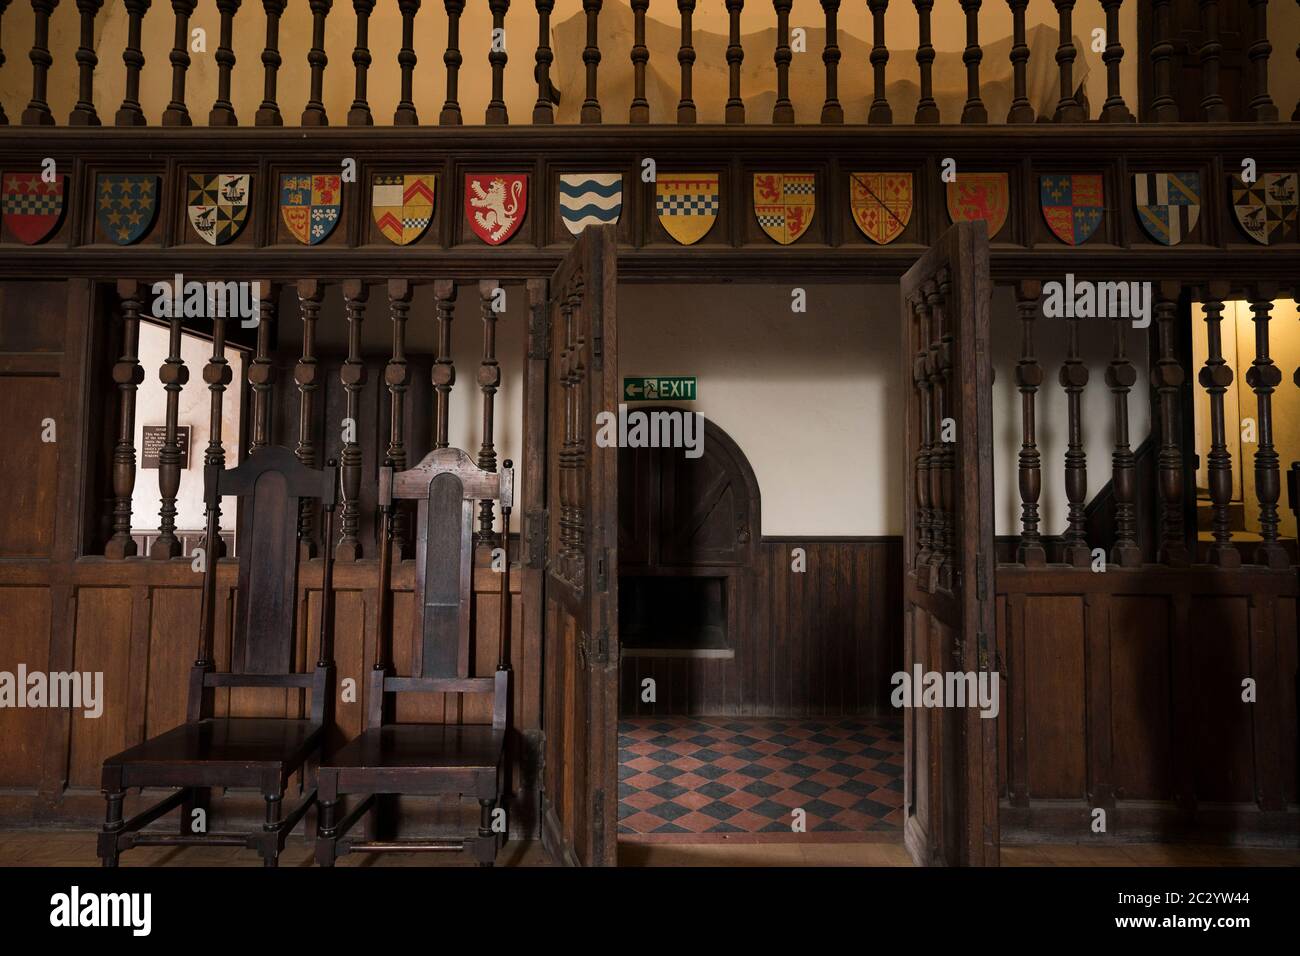 Coat of arm crests arranged above the door in Doune Castle,  Stirling, Scotland, UK, Europe Stock Photo